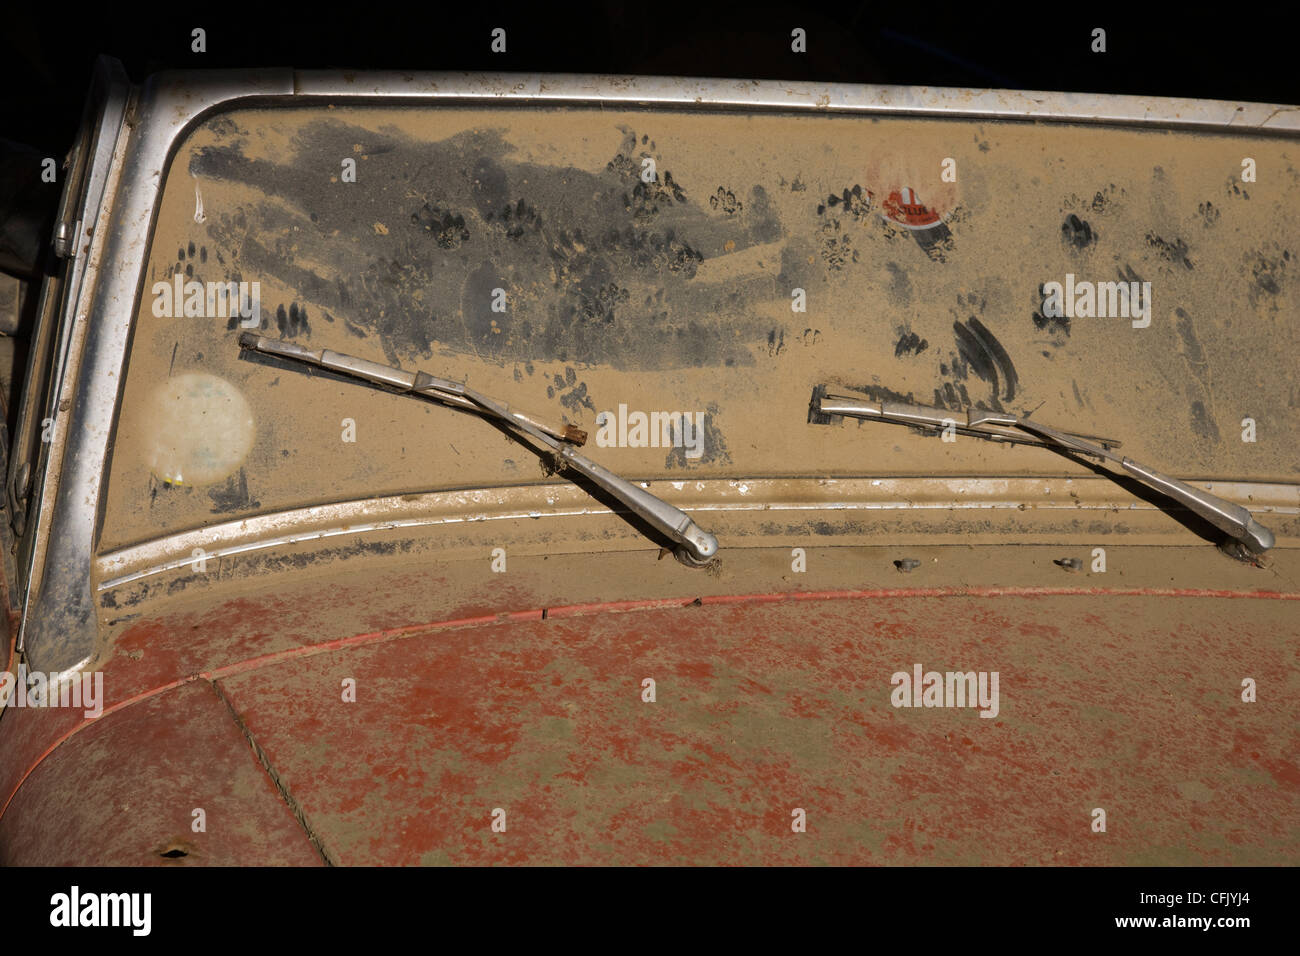 Very dirty, dusty and muddy windscreen of an MG midget car dumped in a farmyard barn Stock Photo